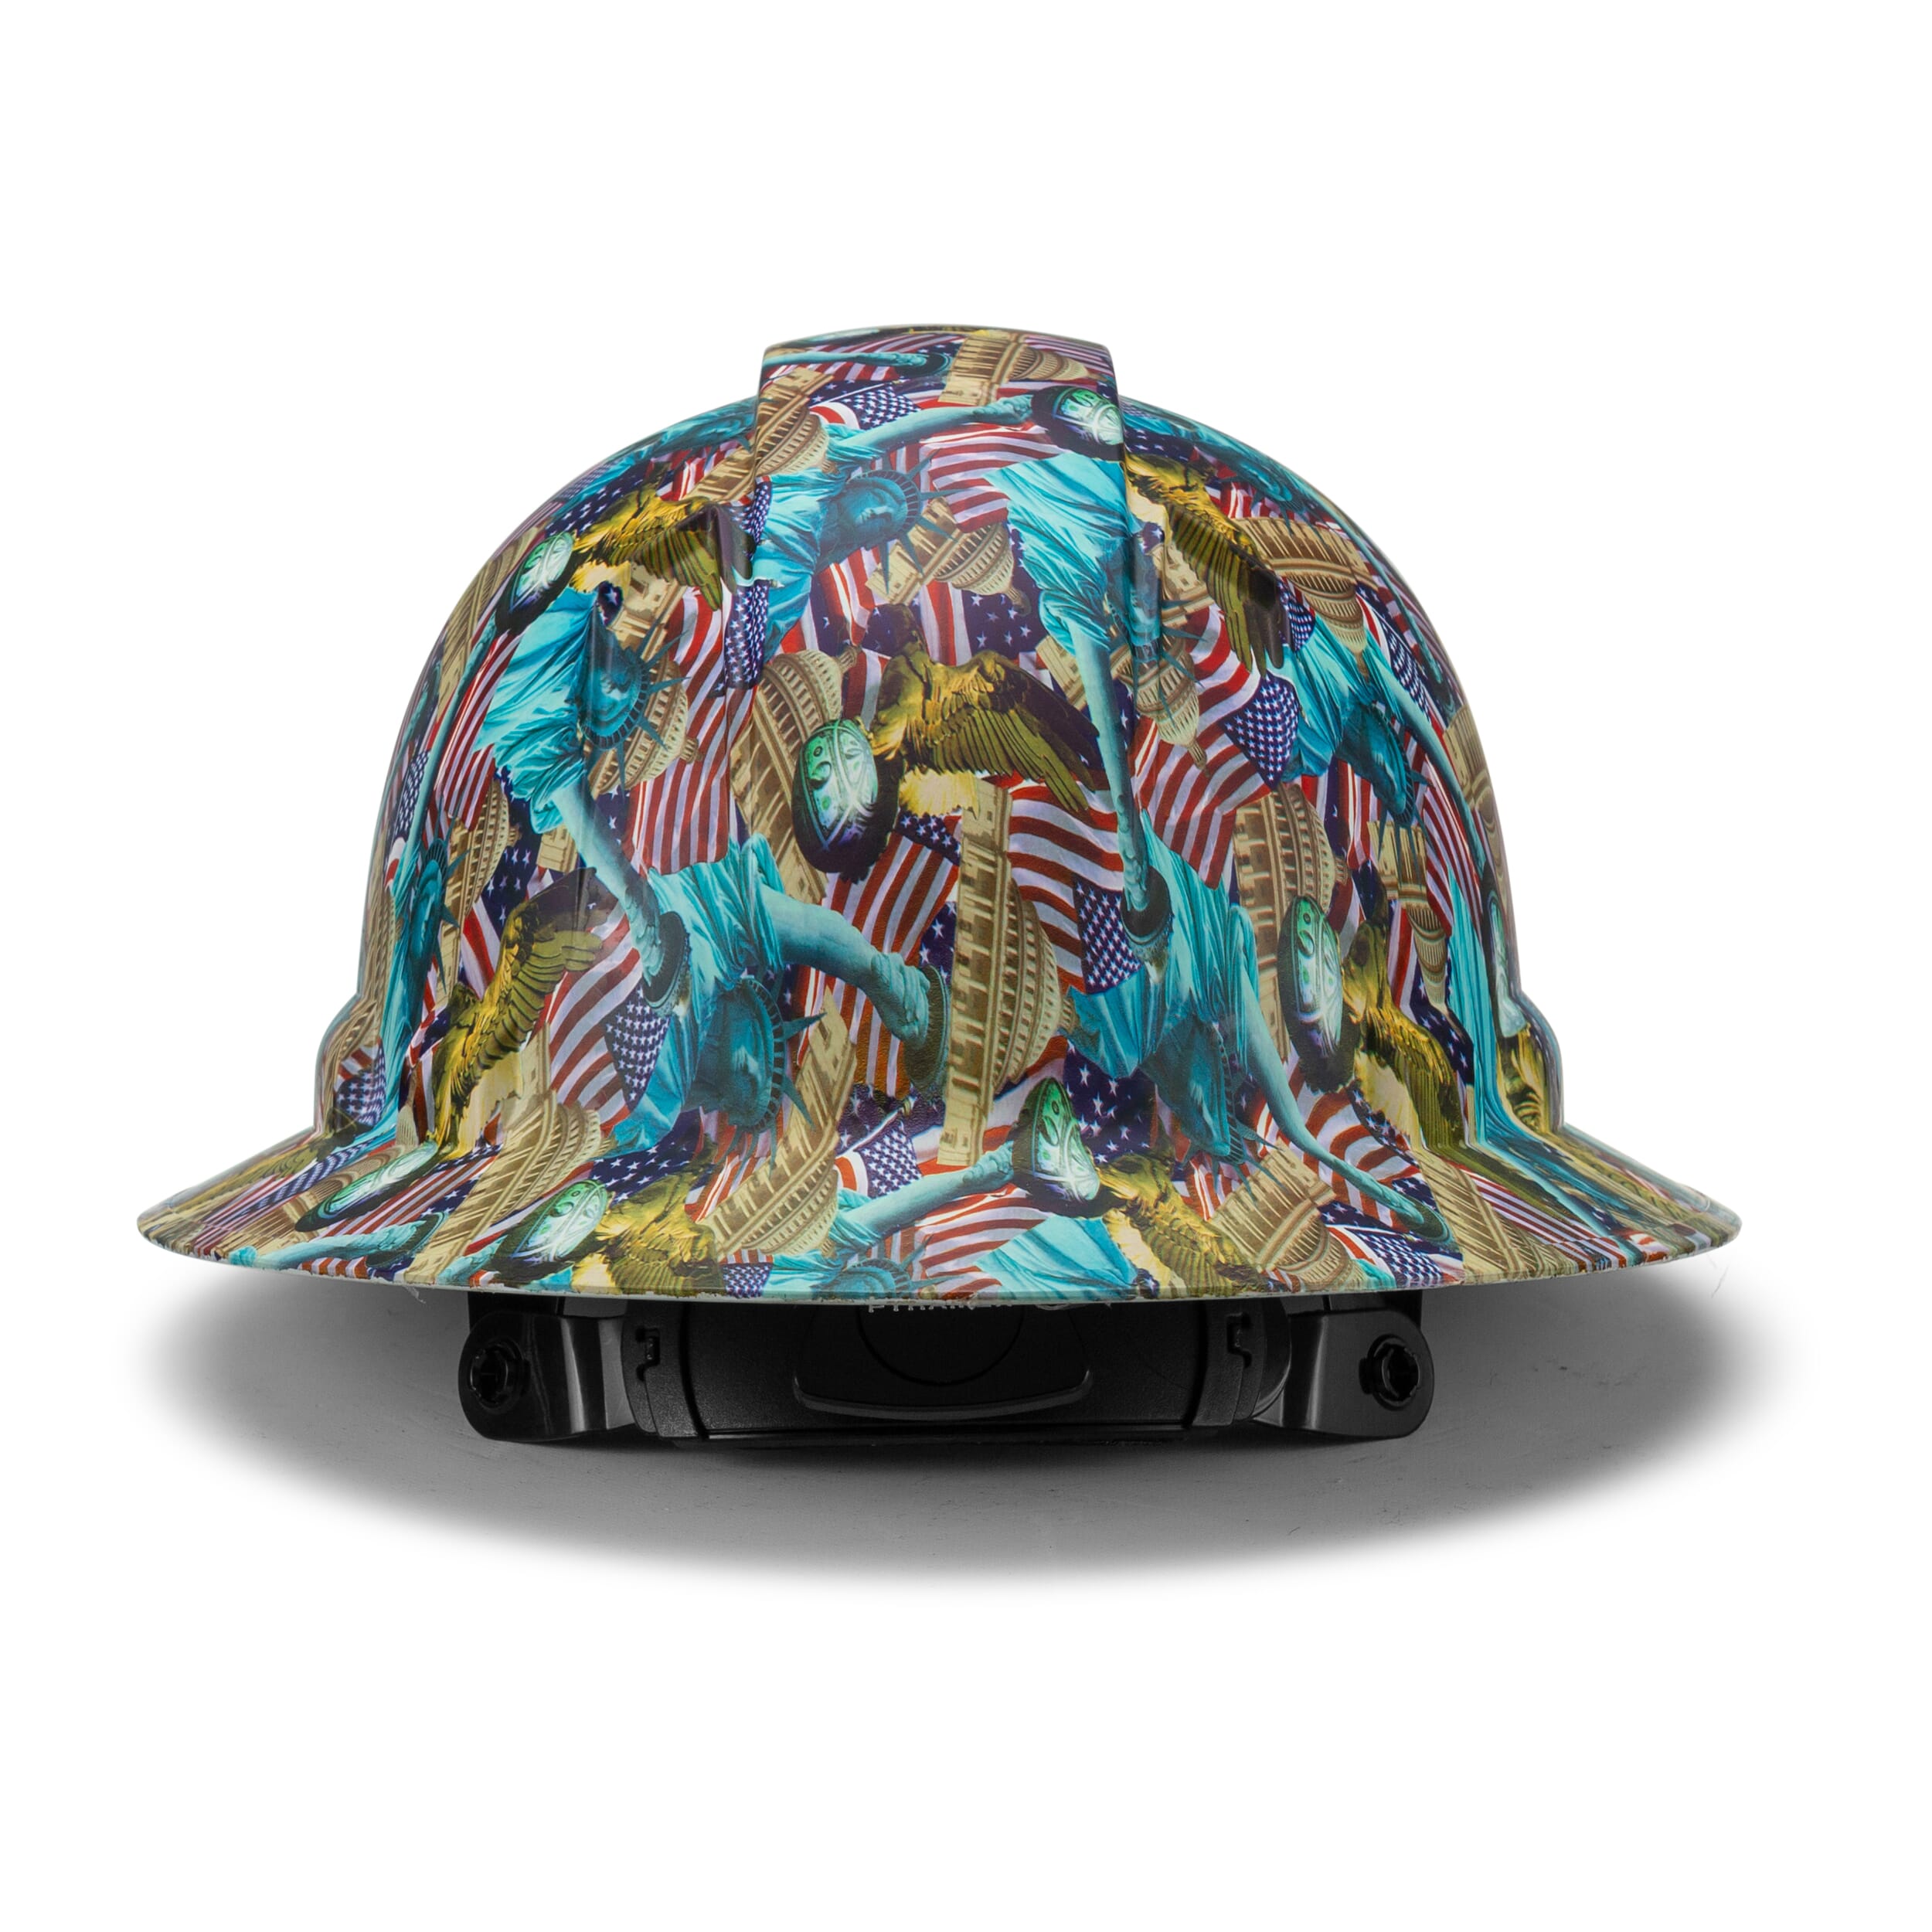 Full Brim Pyramex Hard Hat, Custom American Dream Design, Safety Helmet, 6 Point